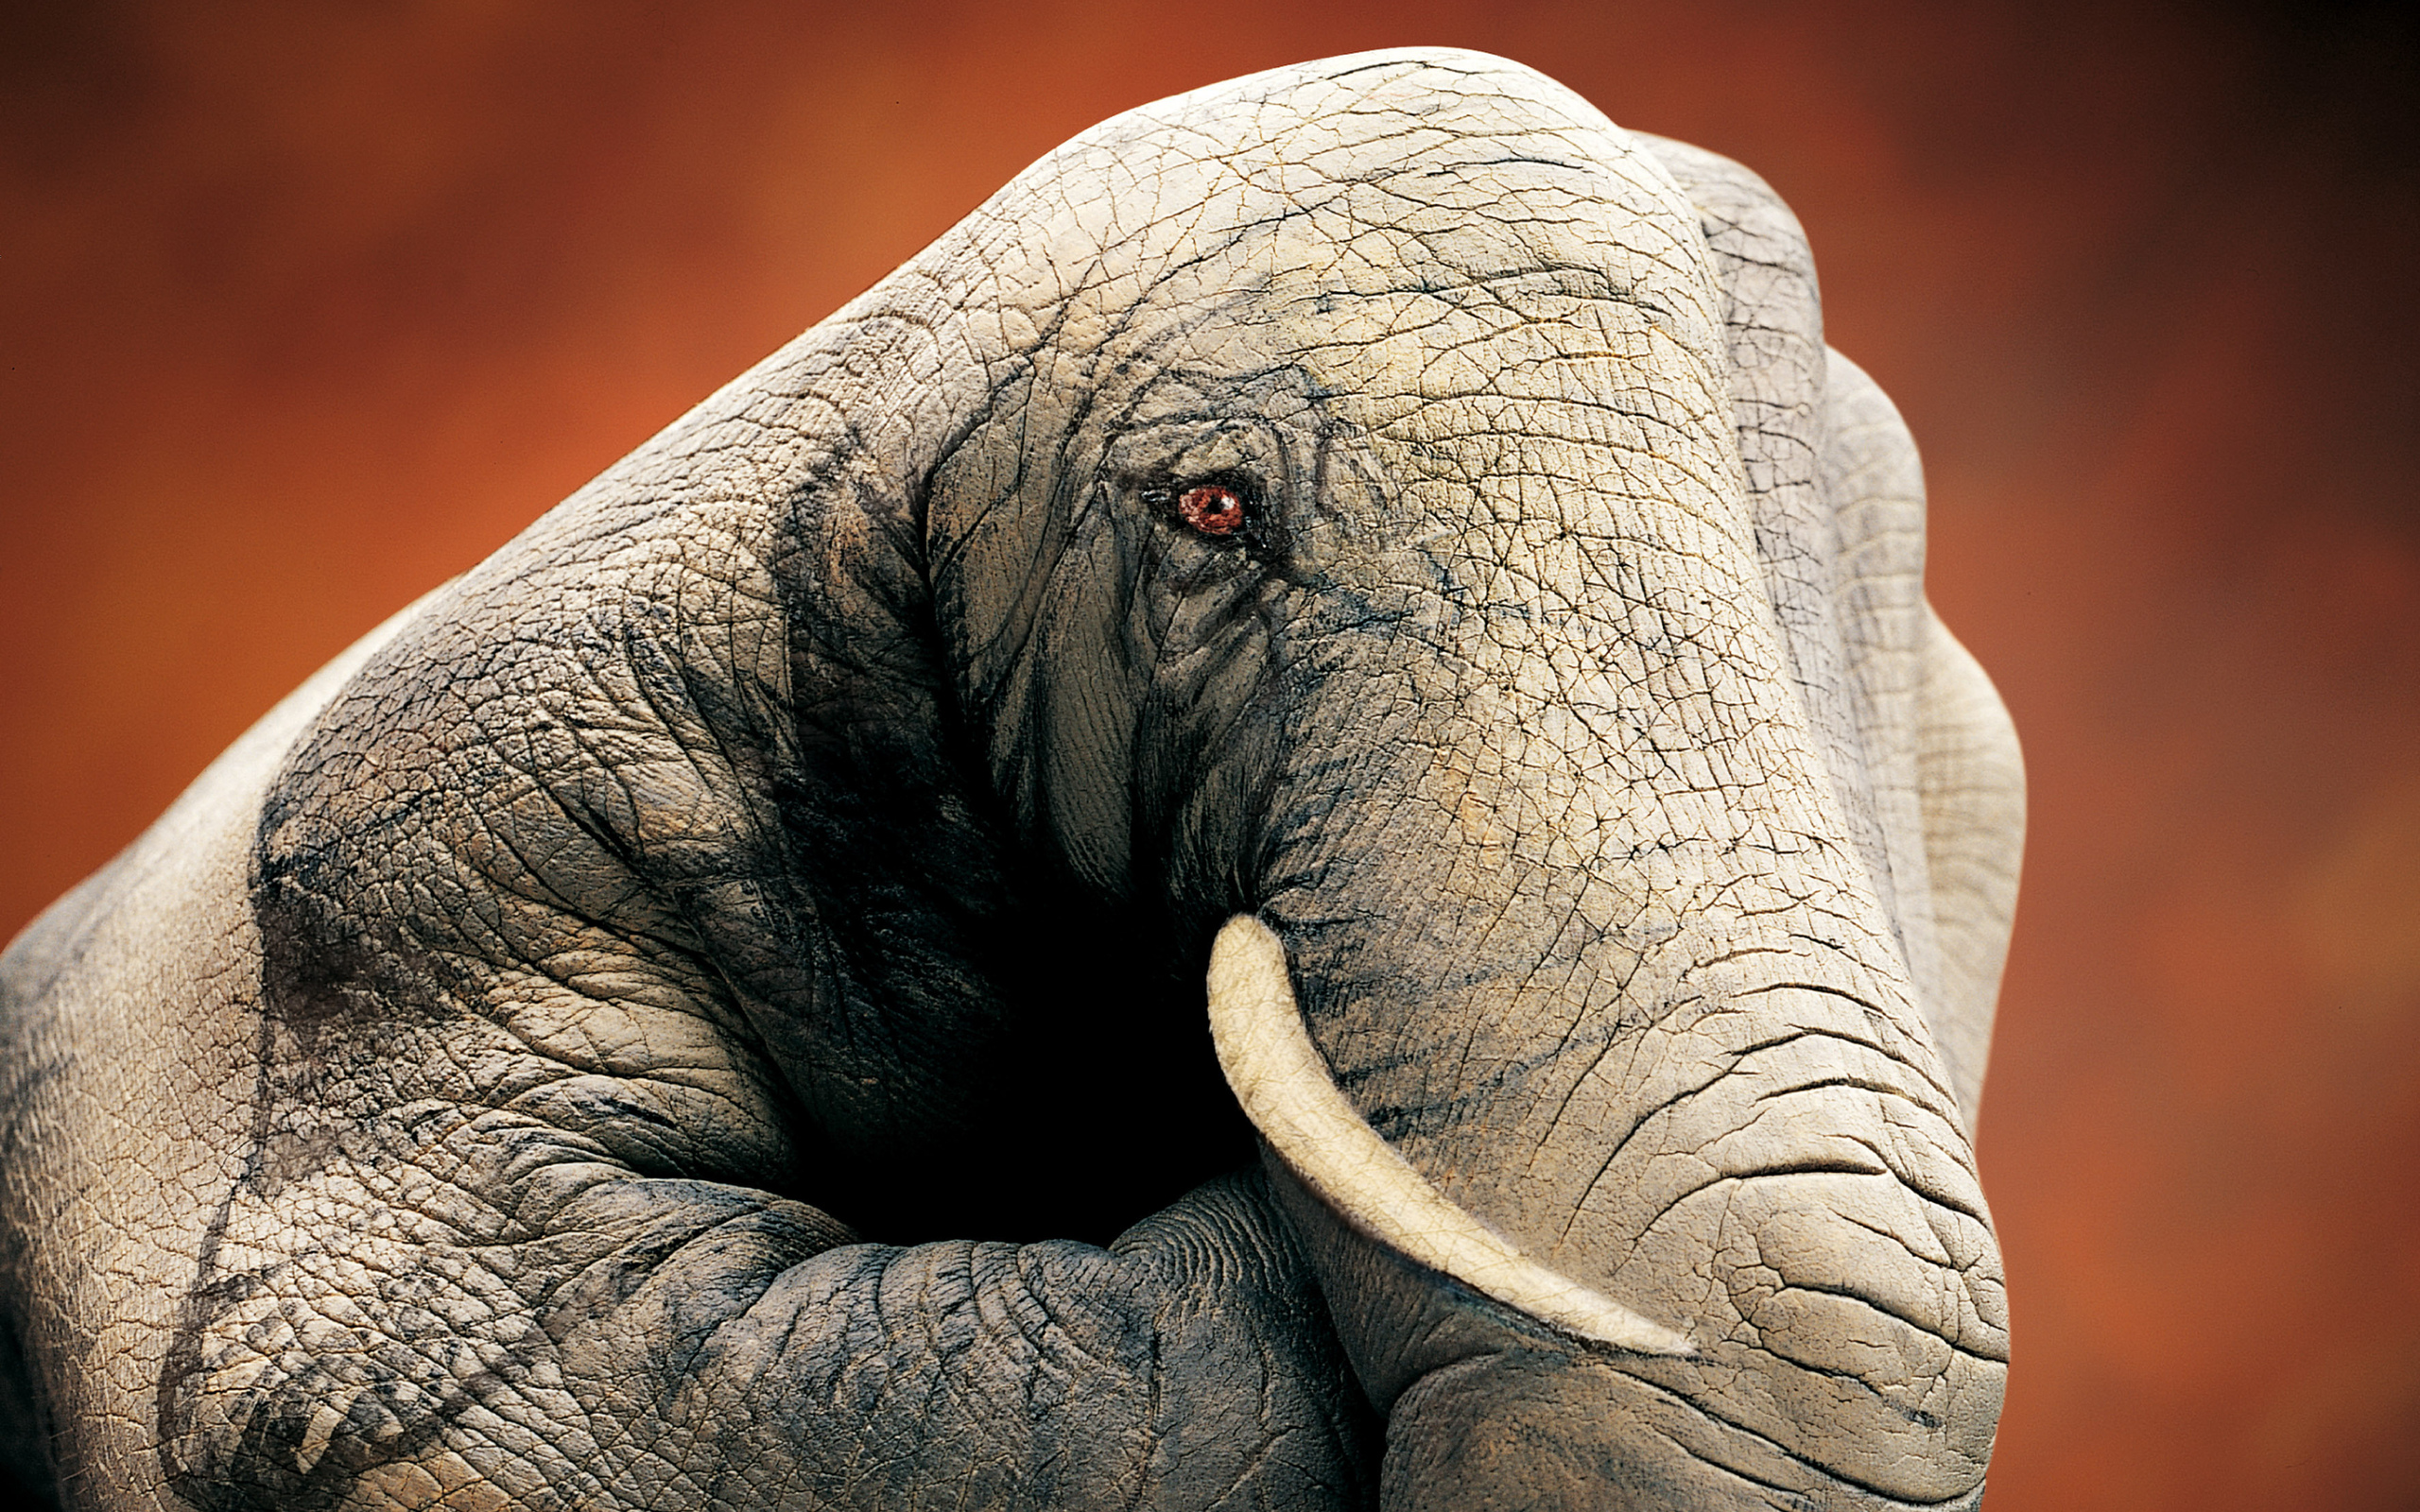 General 2560x1600 hands elephant simple background photo manipulation creativity